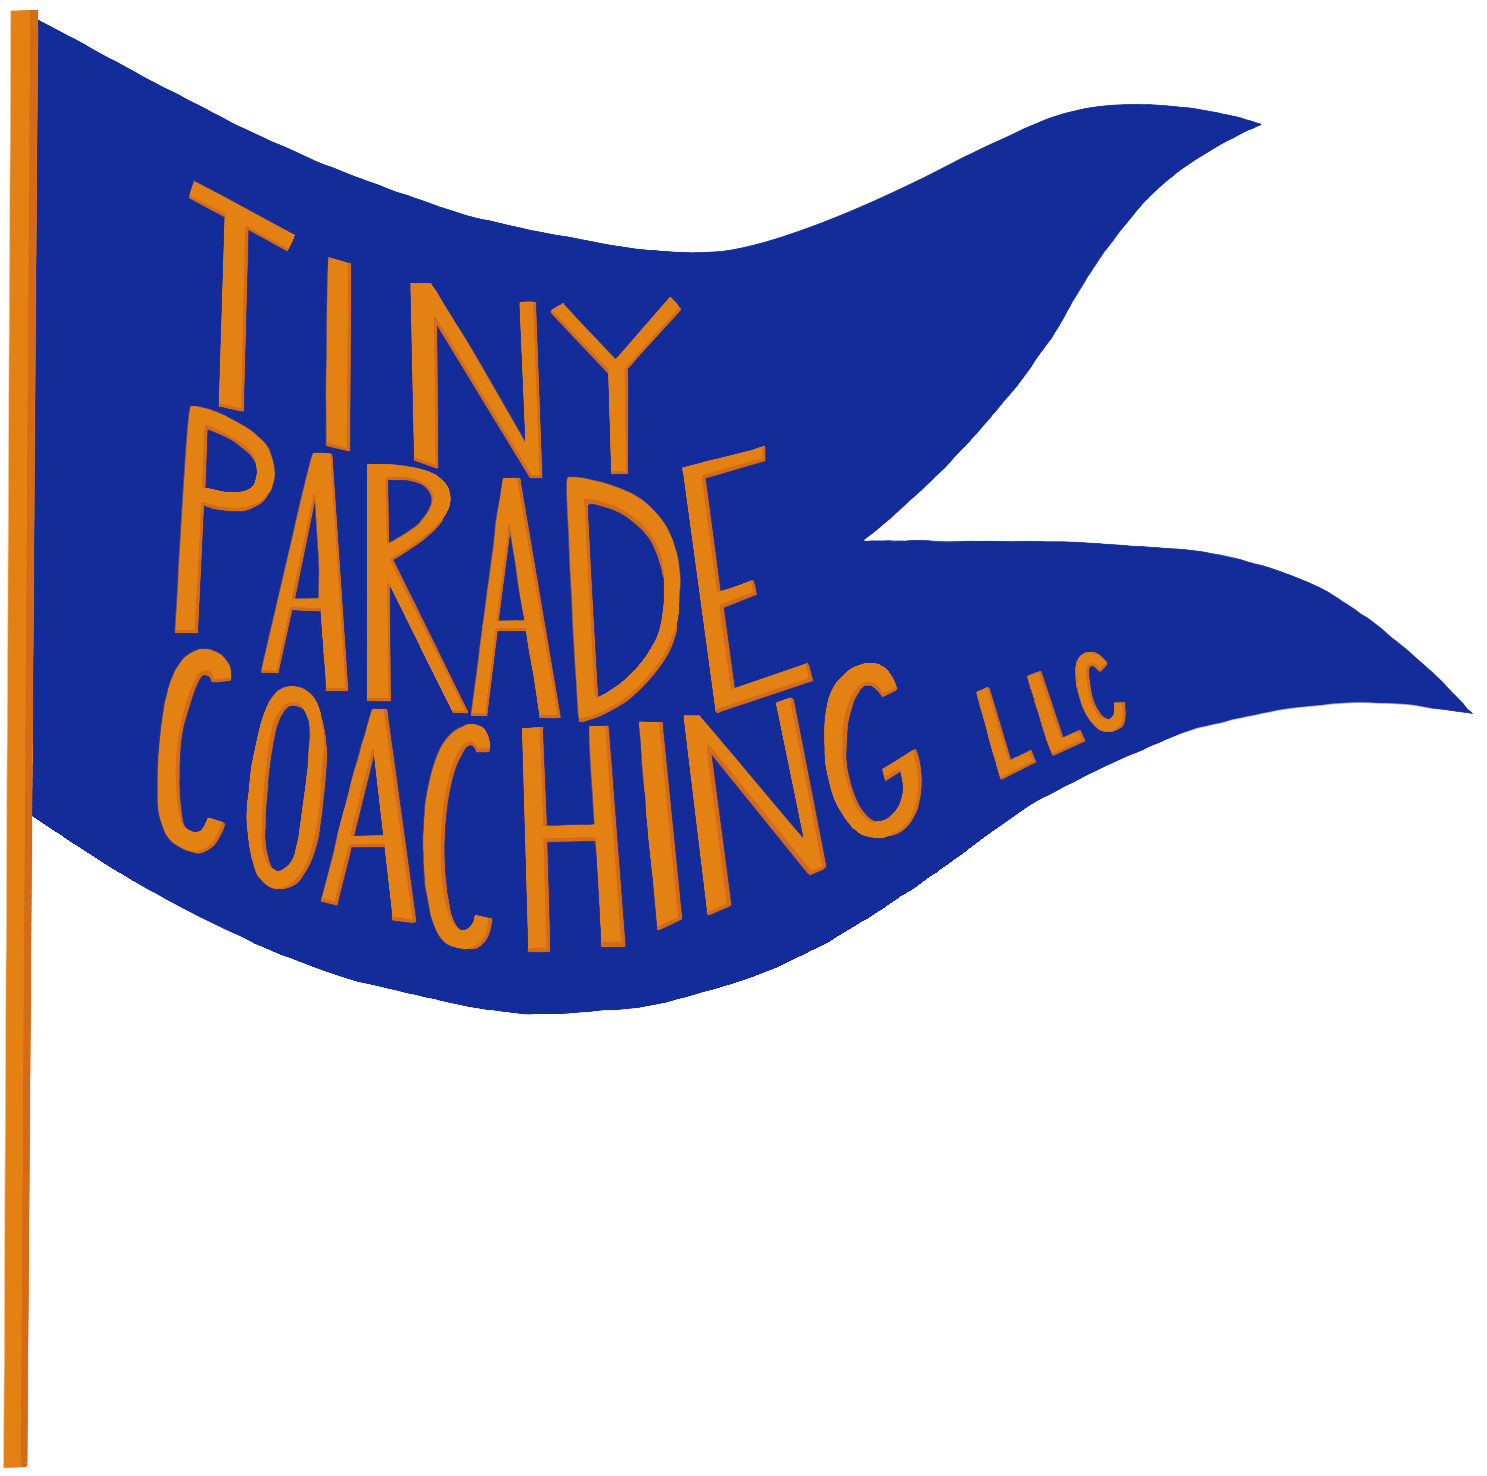 Tiny Parade Coaching